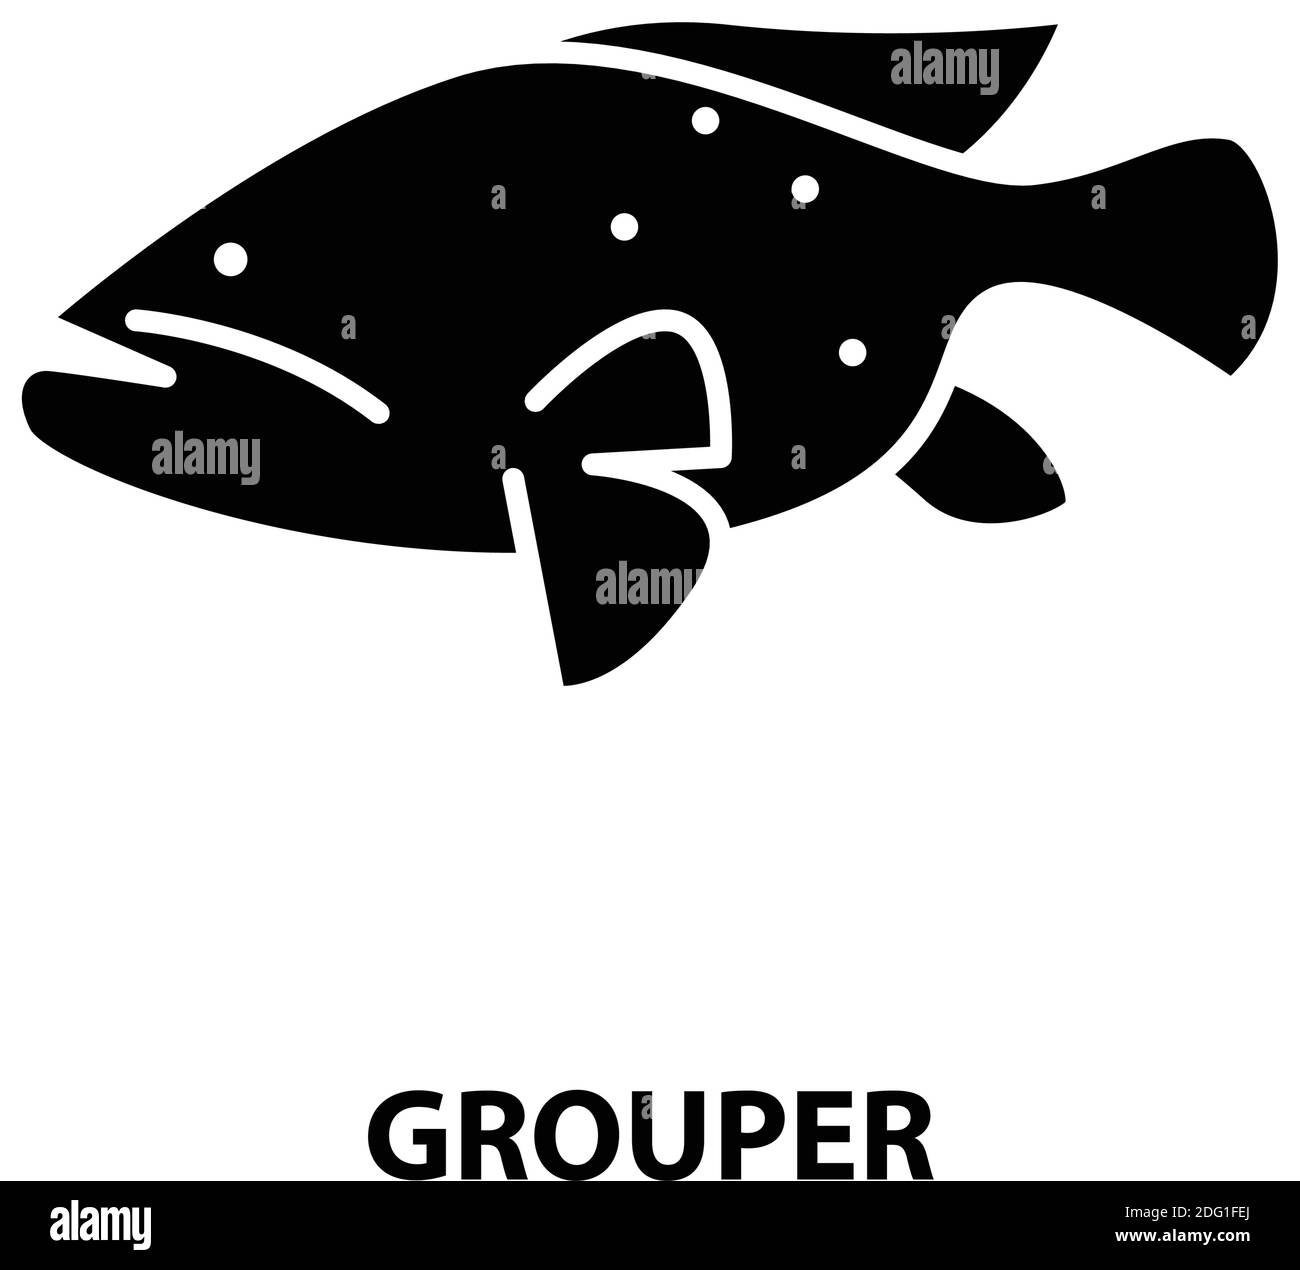 grouper icon, black vector sign with editable strokes, concept illustration Stock Vector